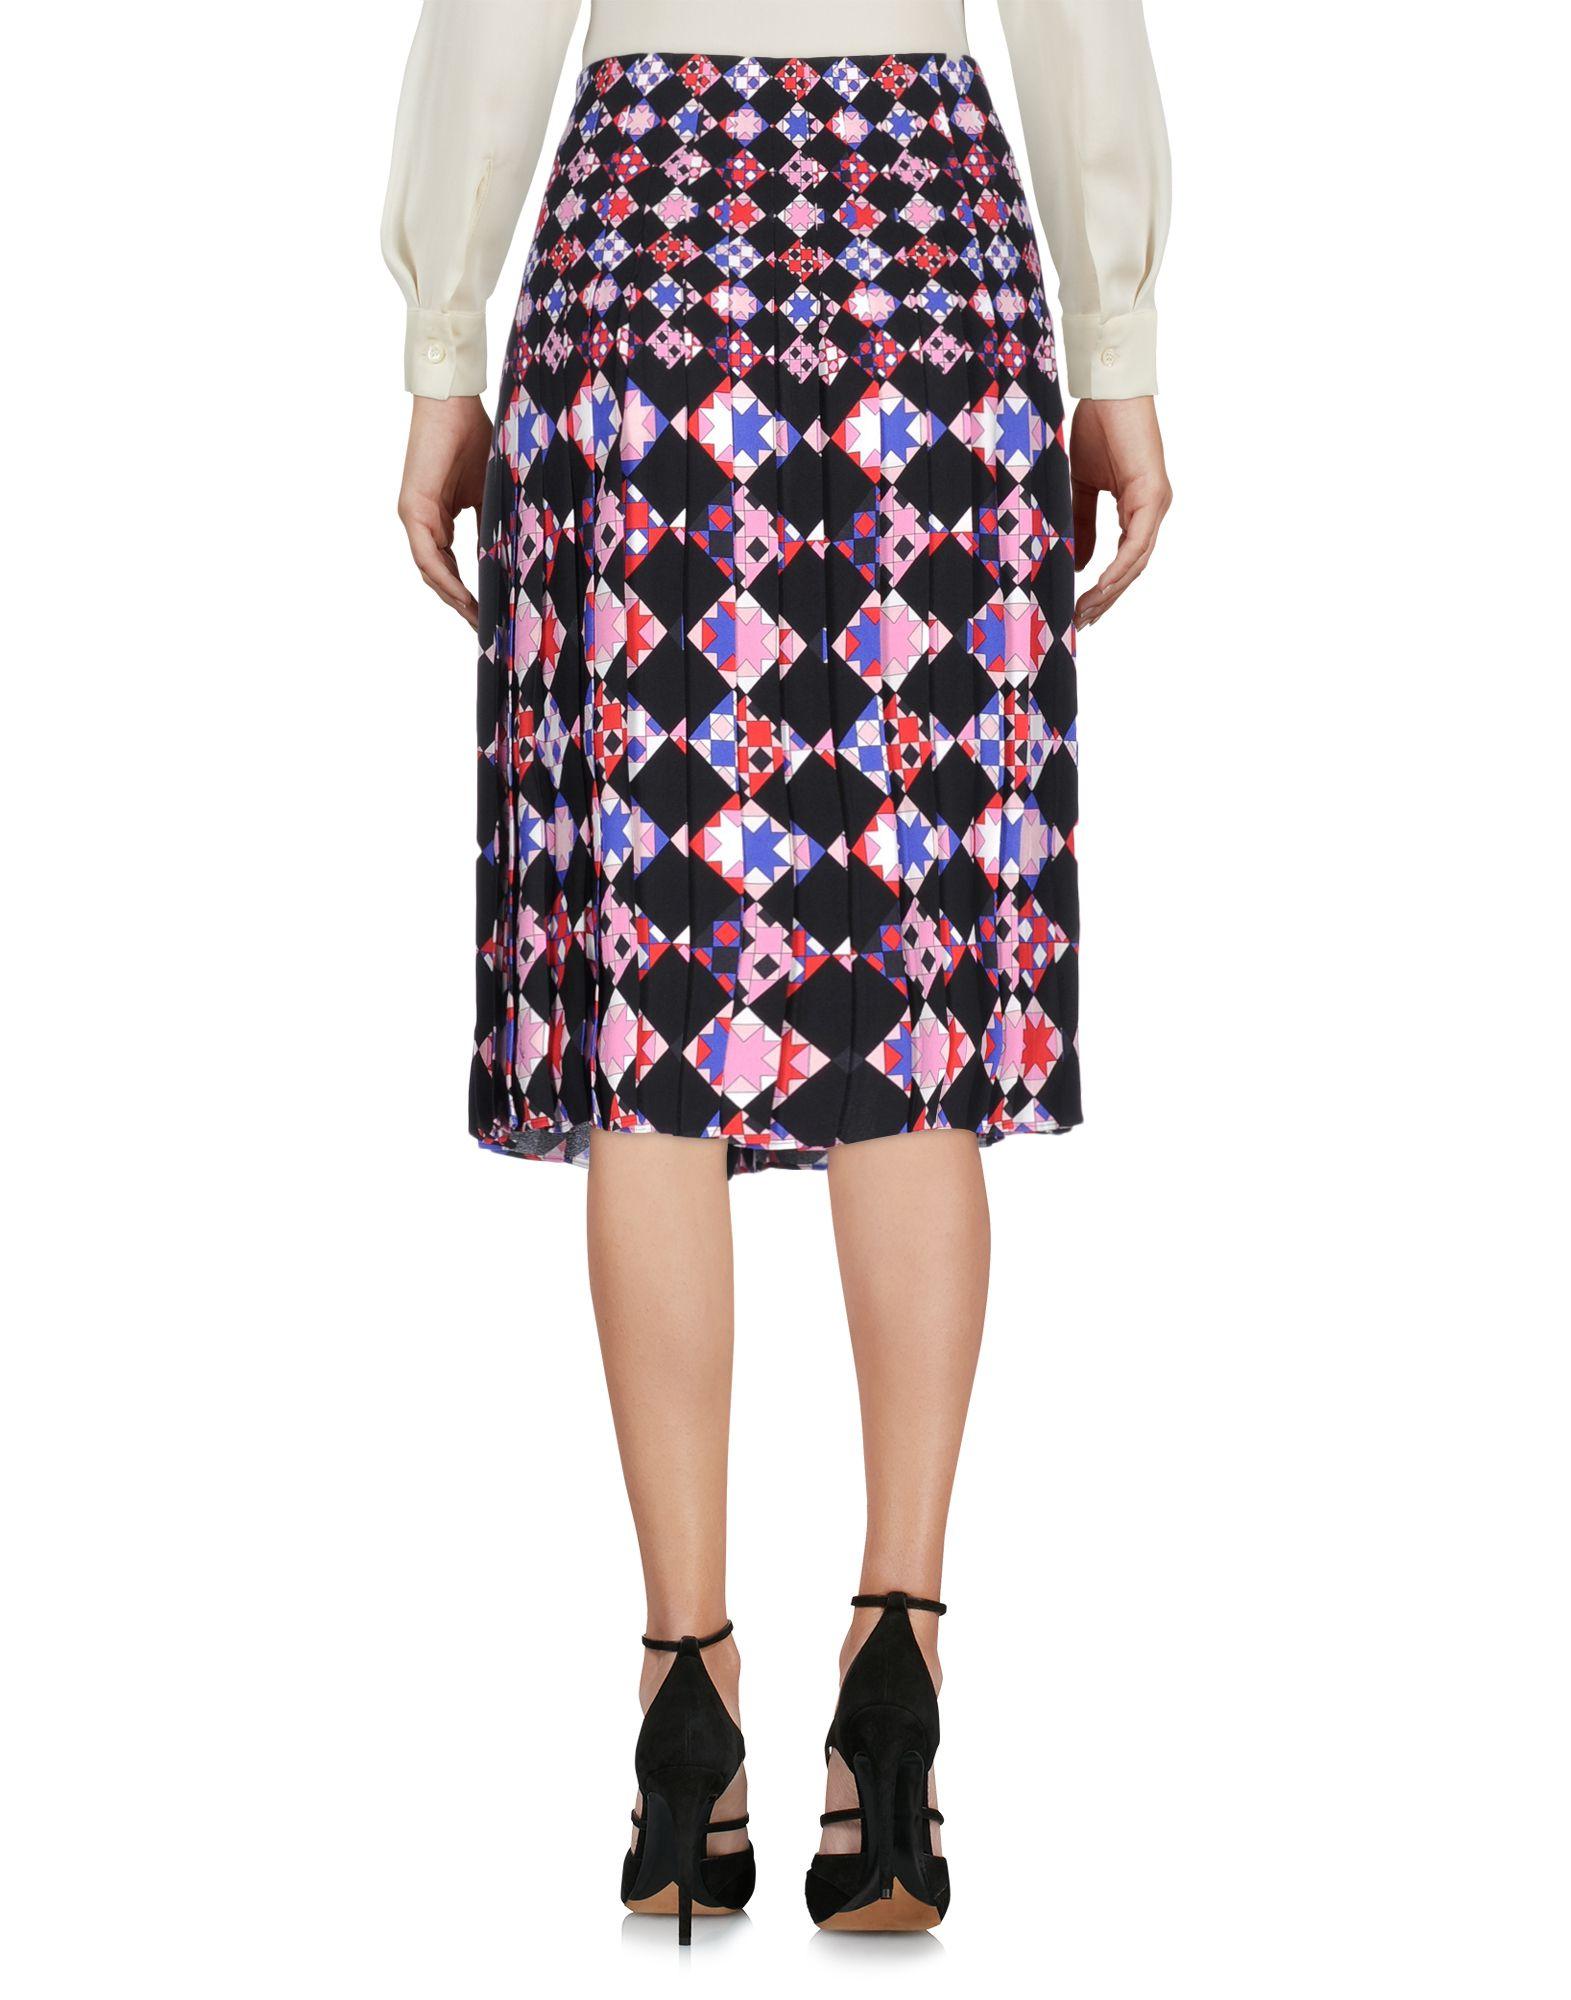 Lyst - Emilio Pucci Geometric Print Pleated Skirt in Black